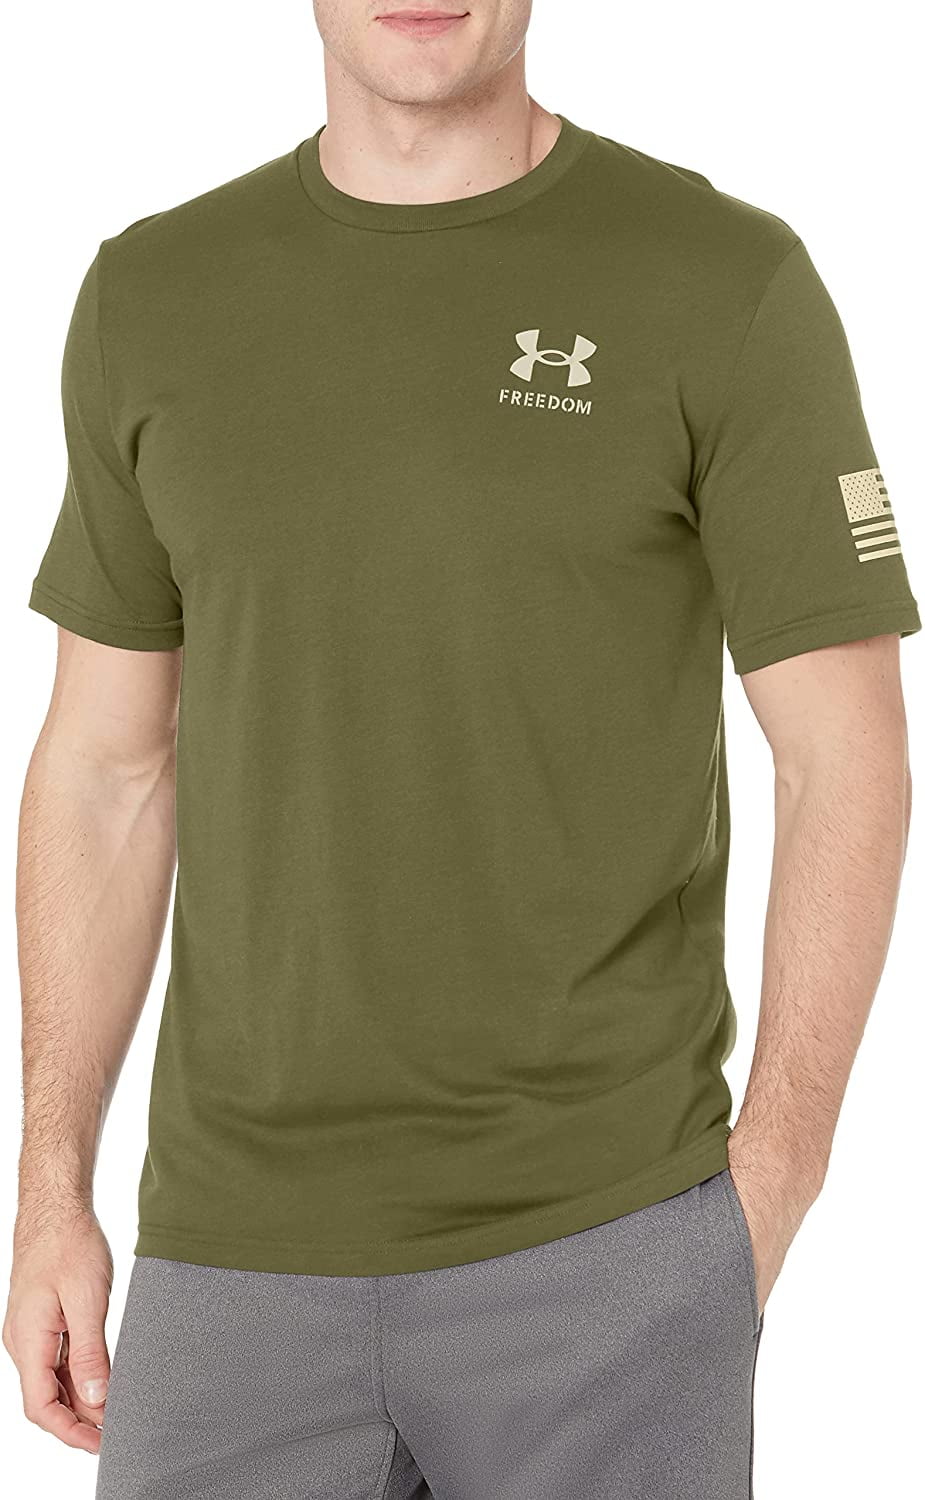 Under Armour Freedom USA American Flag Standard Mens T-Shirt 1353975 390 Green 